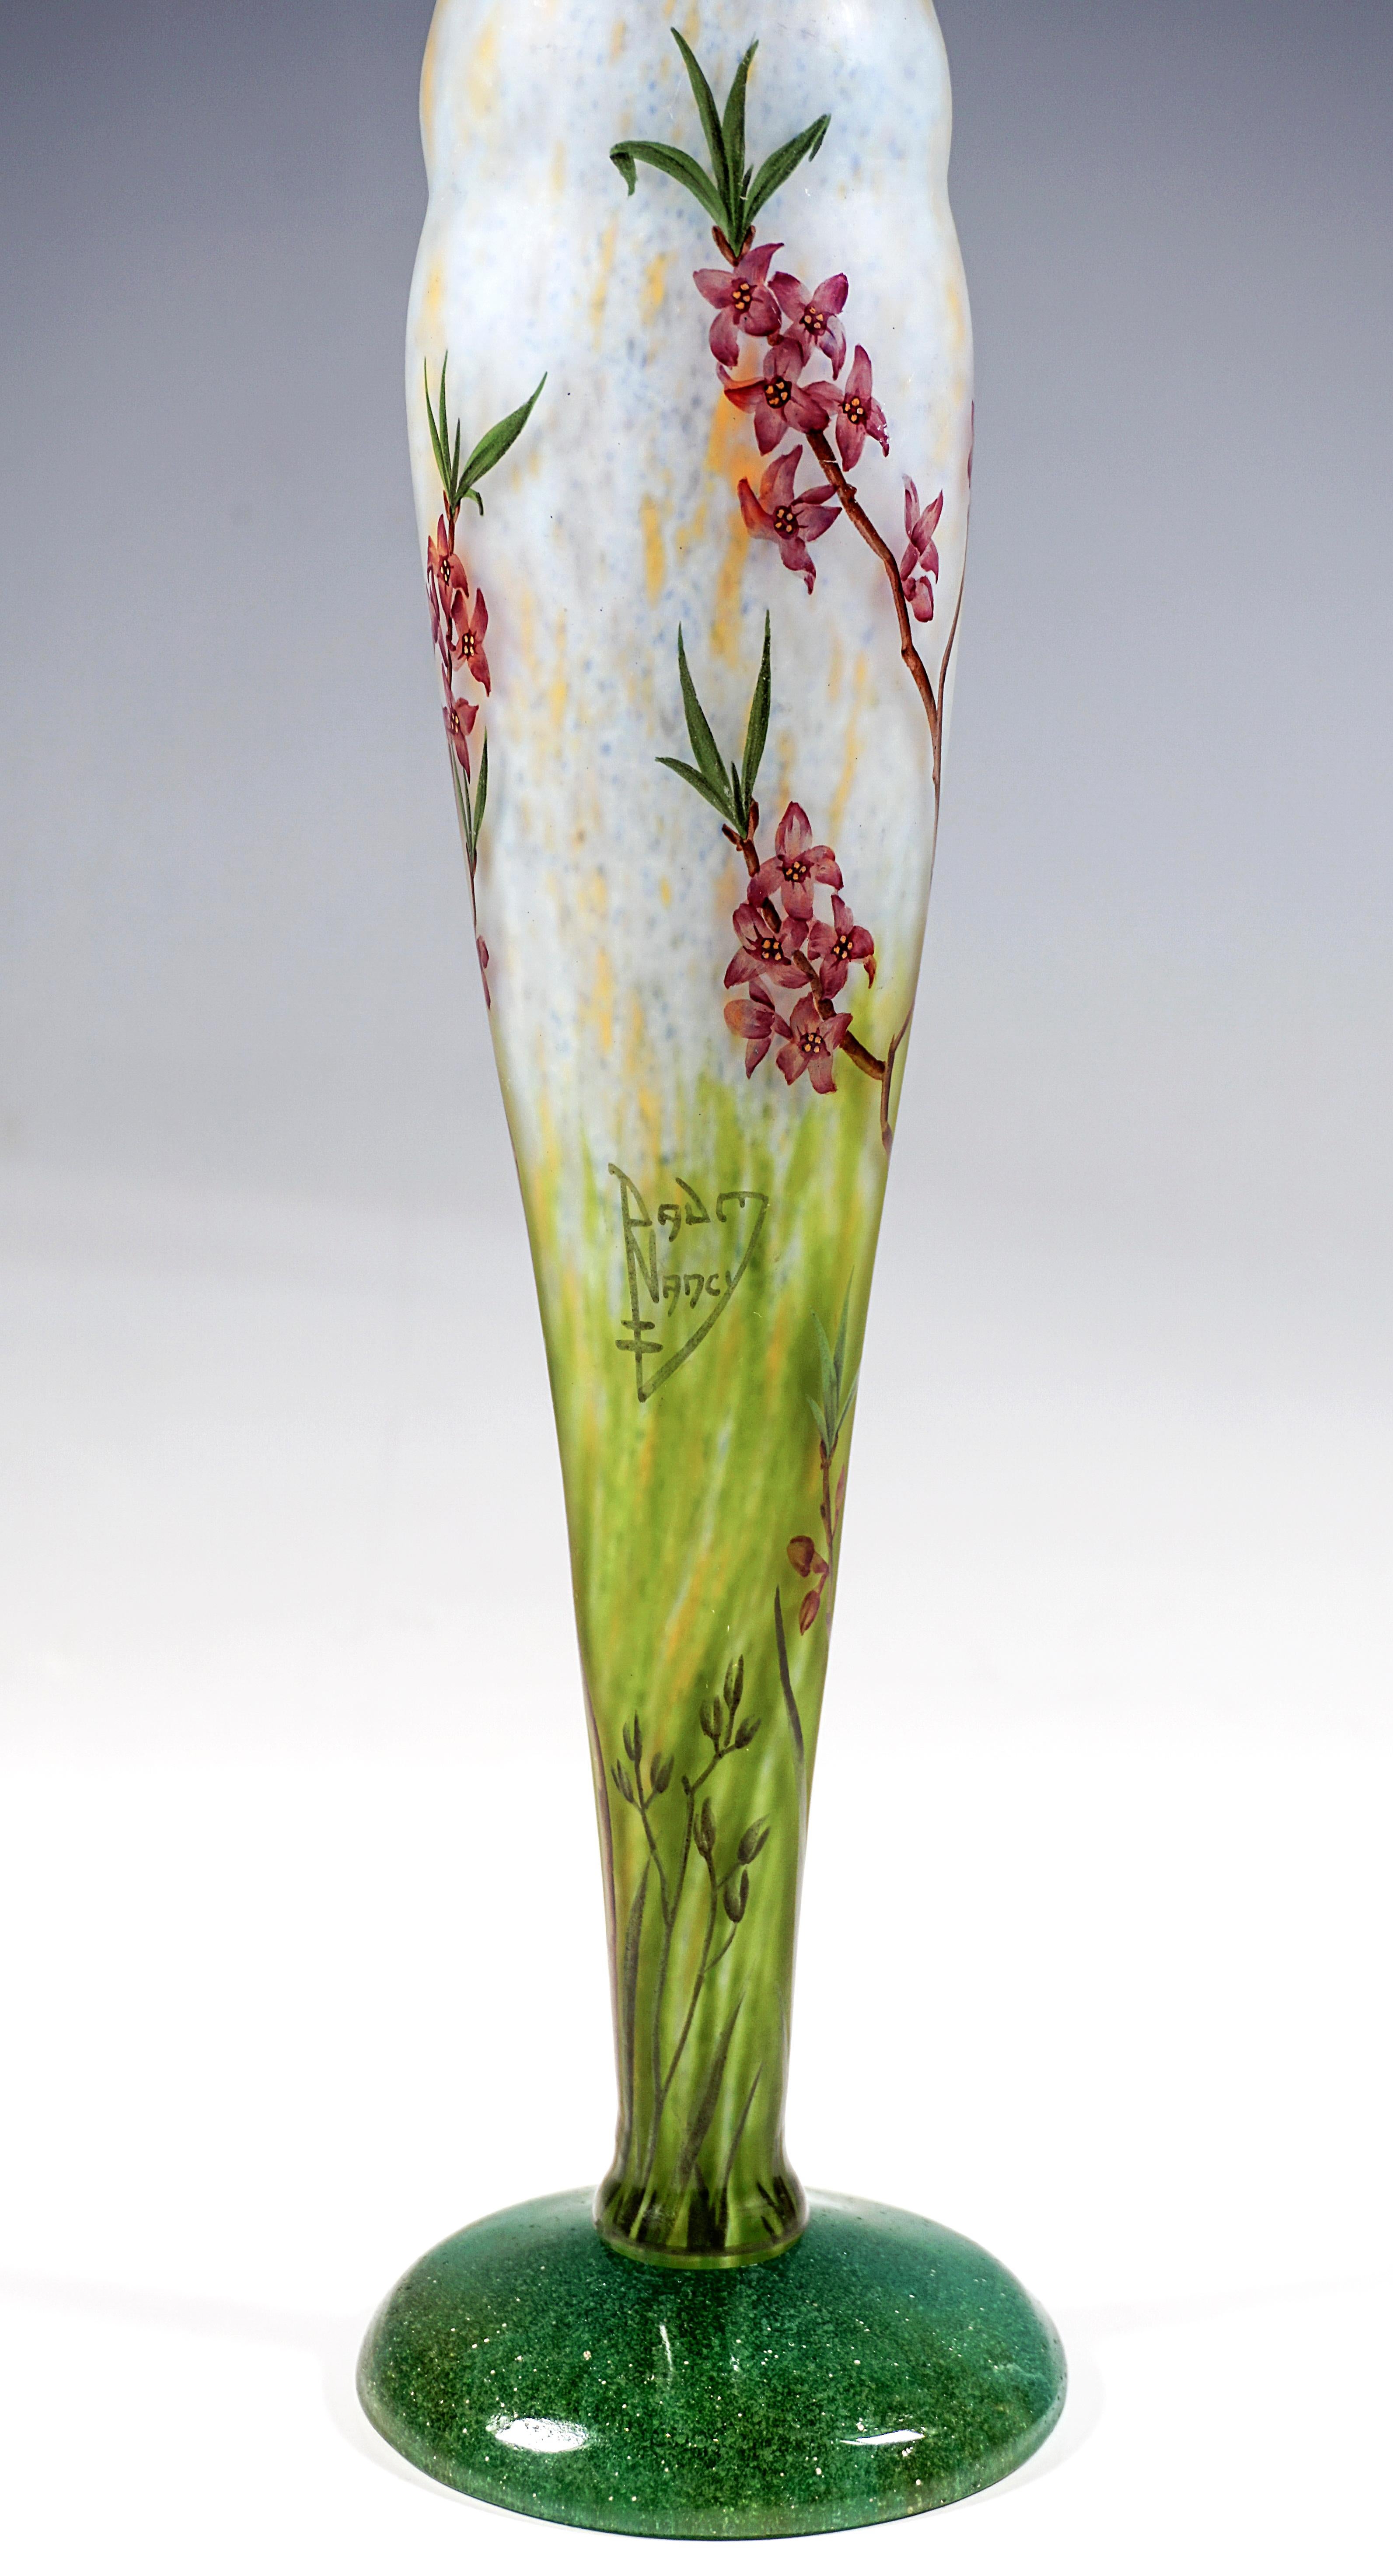 Early 20th Century Art Nouveau Vase with Delicate Flower Branches Decor, Daum Nancy, France, c 1910 For Sale